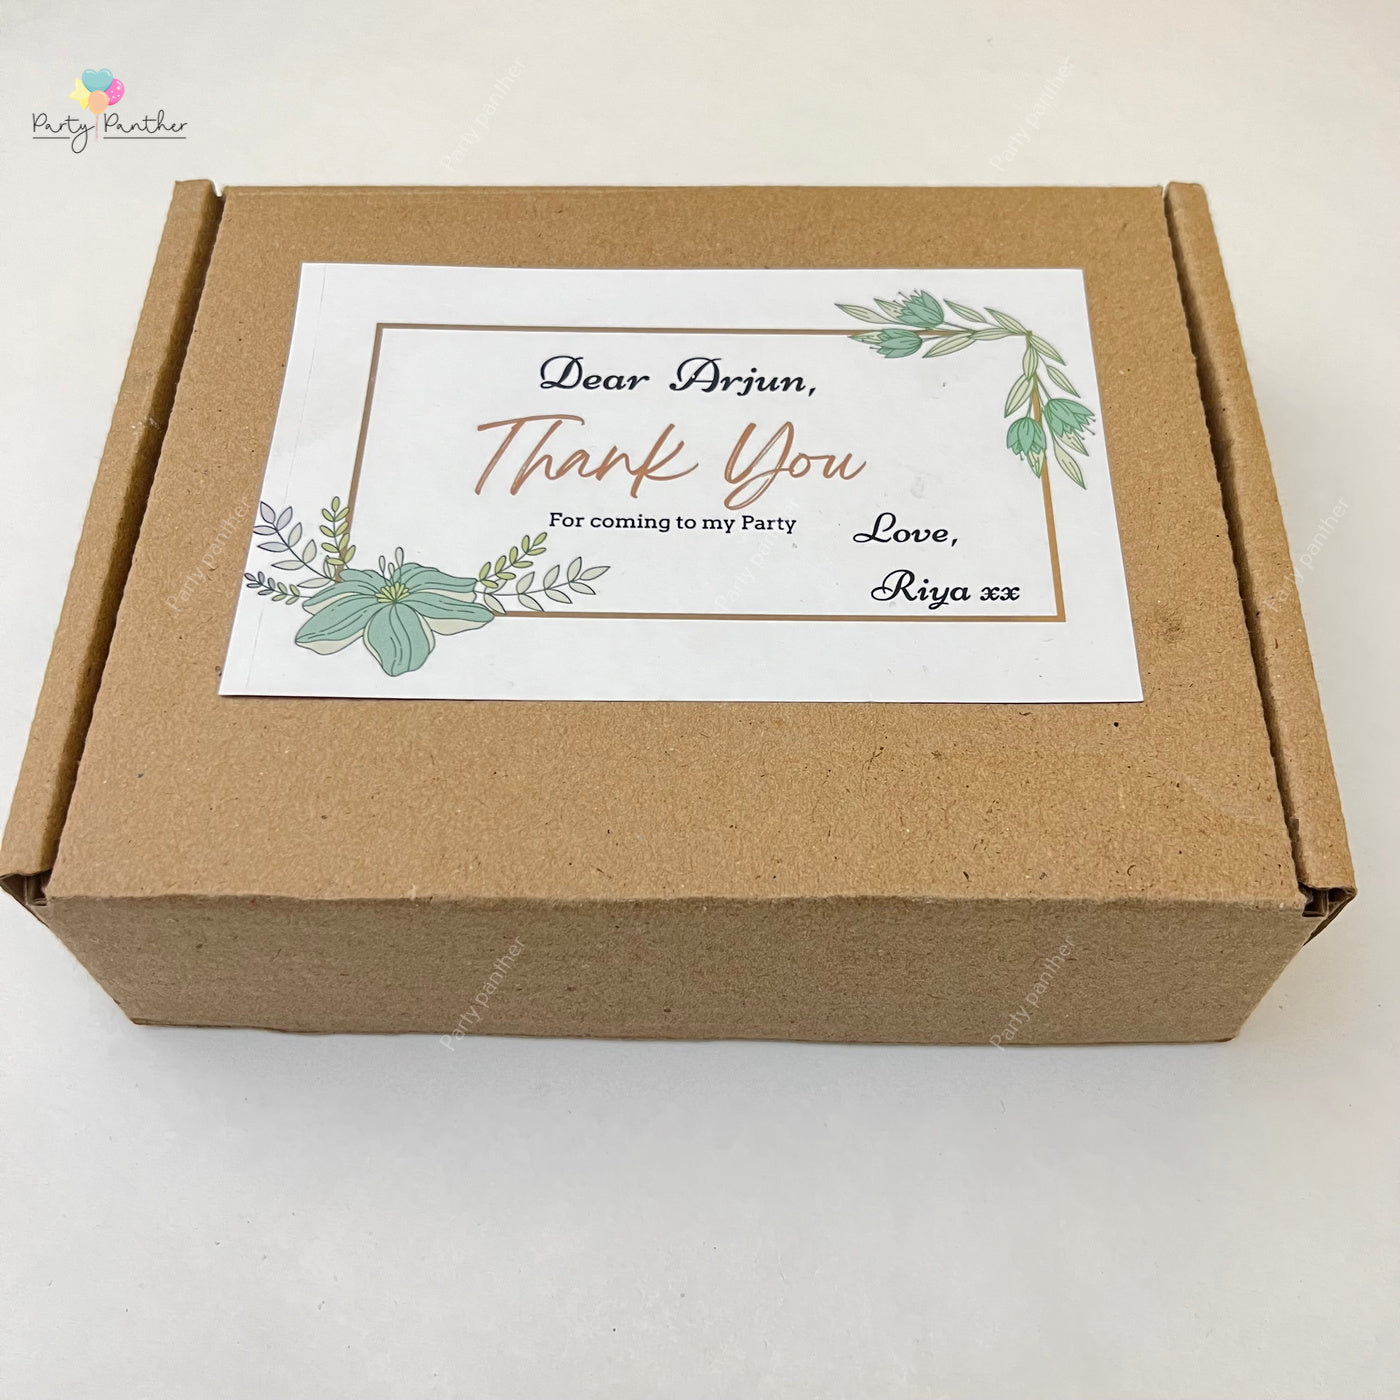 Best Return Gifts for First Birthday - CV24N01 • Chocovira Chocolates